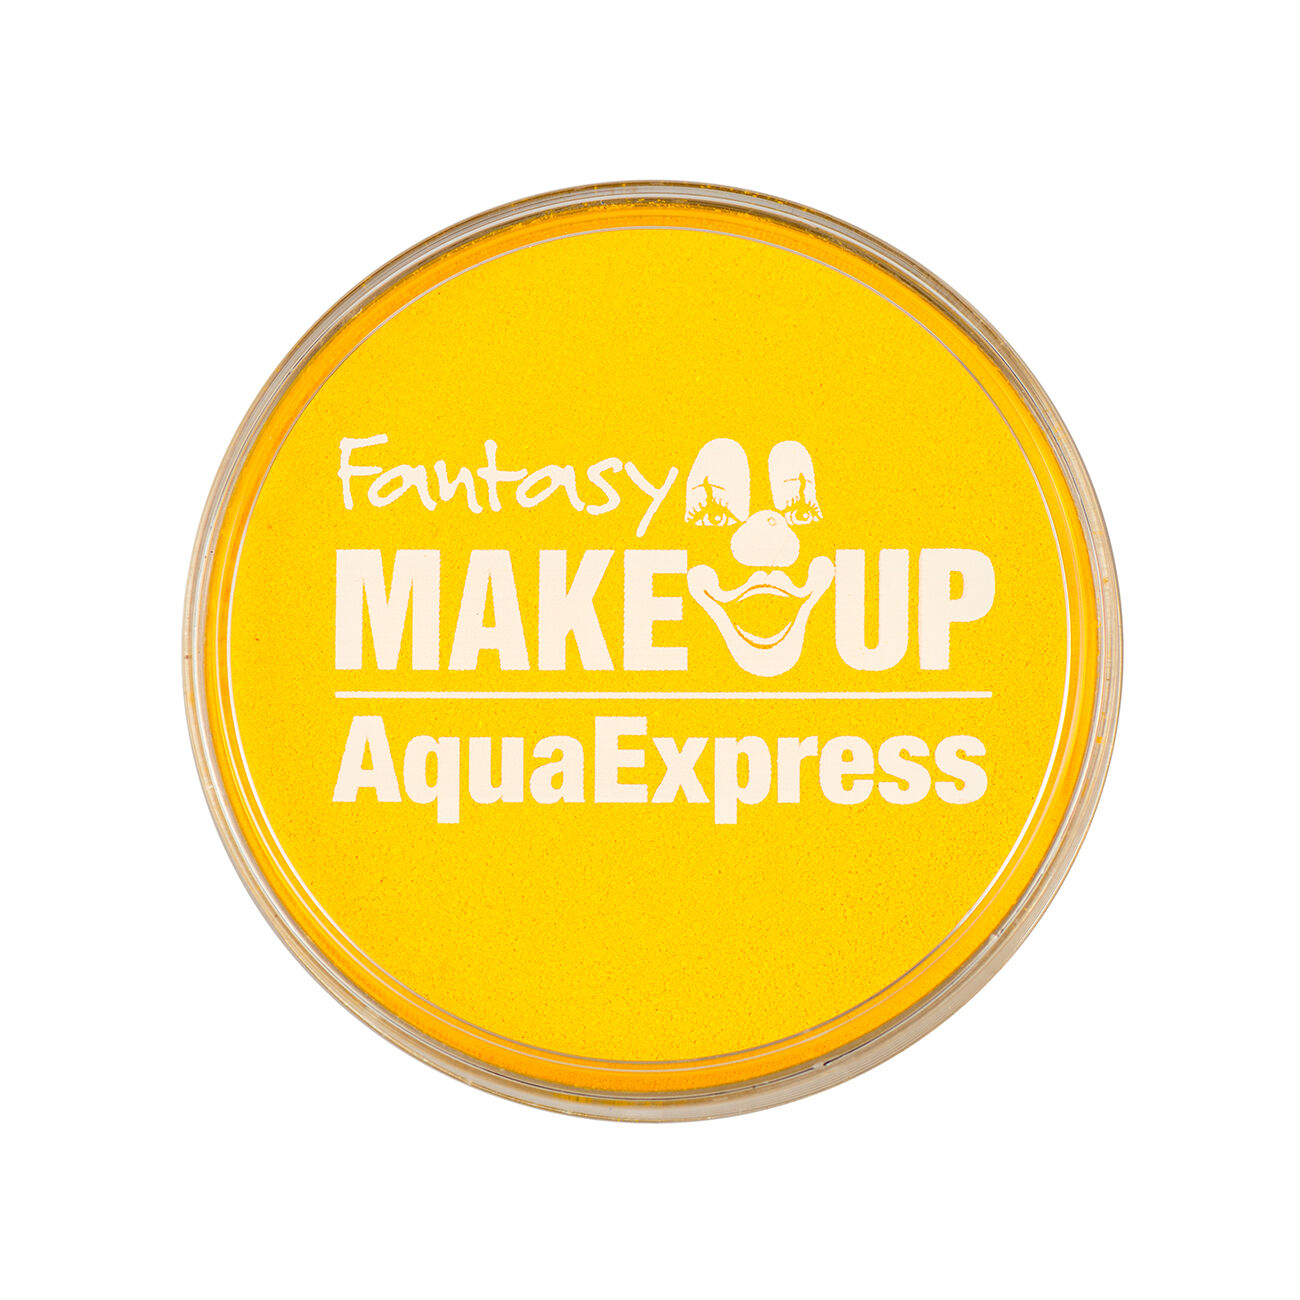 NEU Fantasy Aqua-Express Schminke auf Wasserbasis, 30g, Gelb